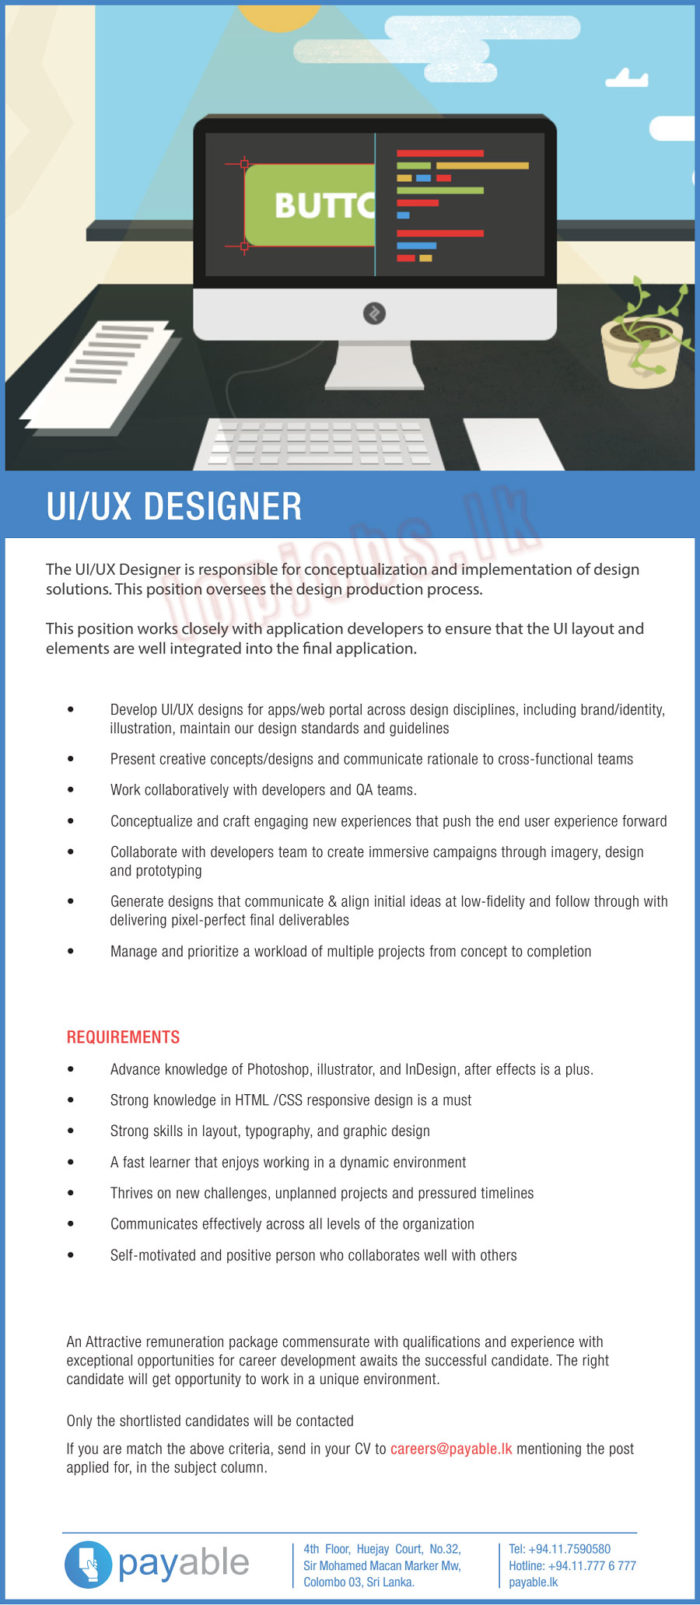 uxdesigner-8-700x1605 The UX designer job description: A sample template to use